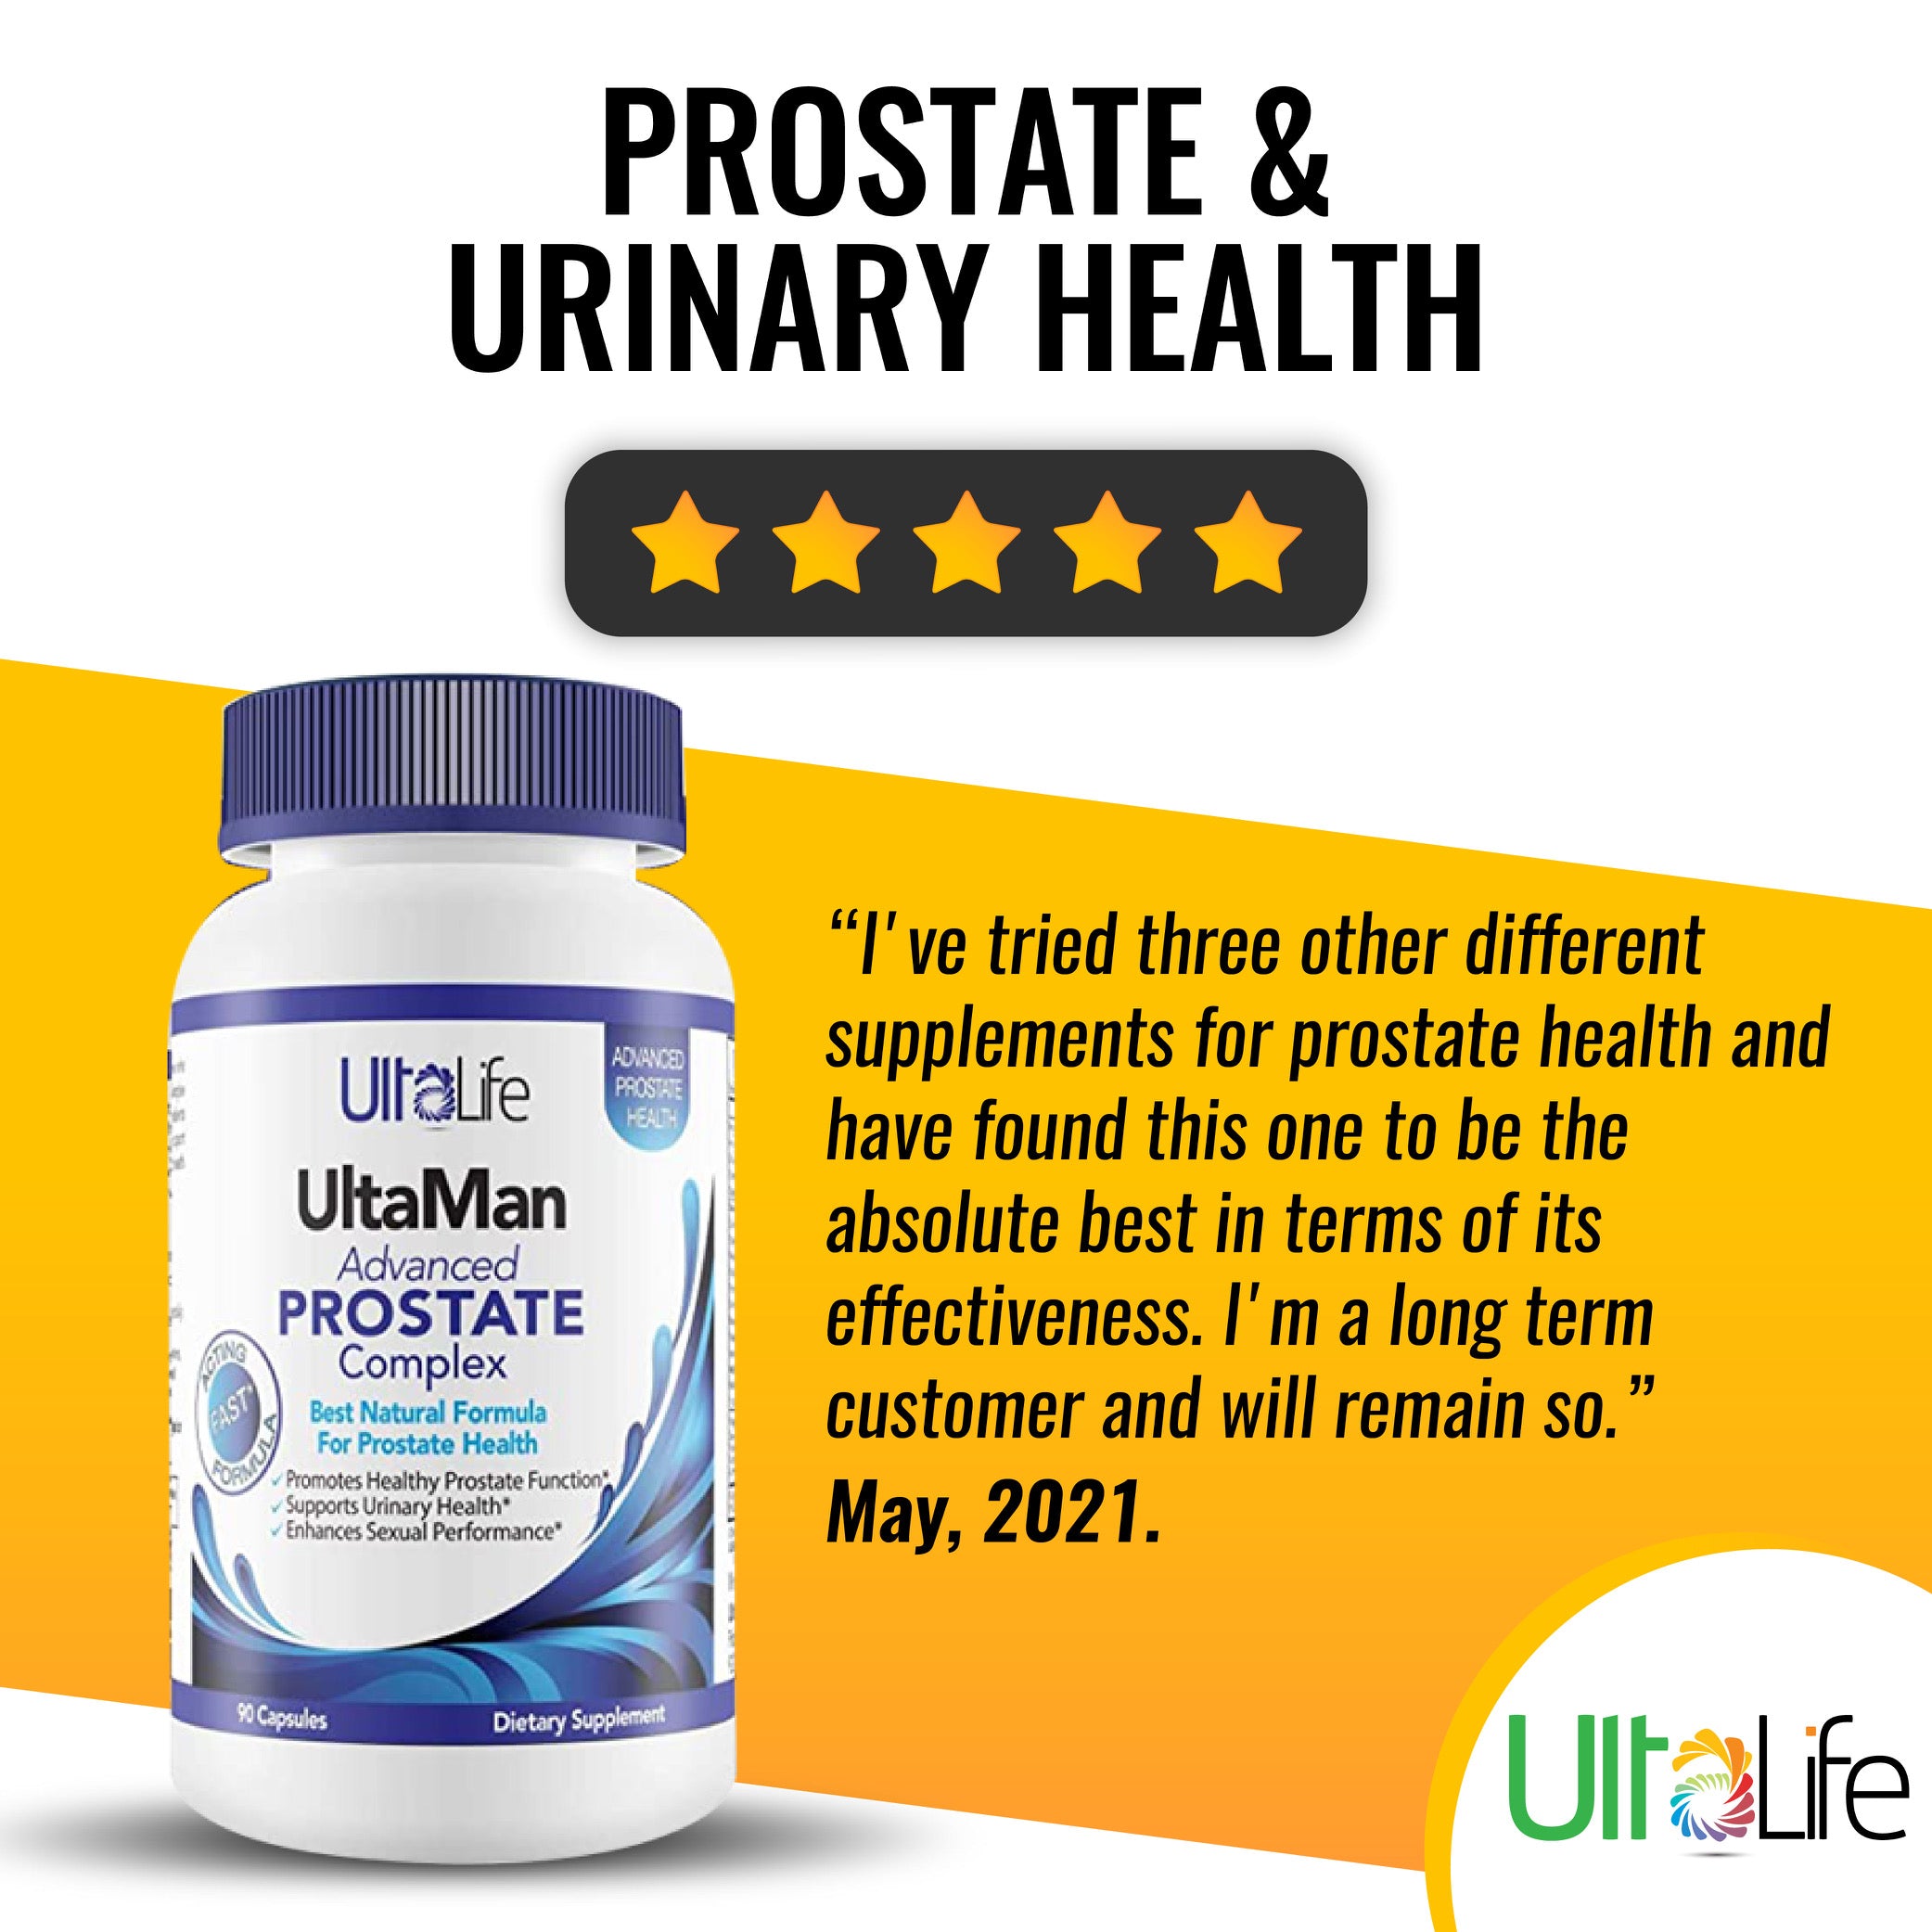 ULTALIFE UltaMan Advanced Prostate Complex